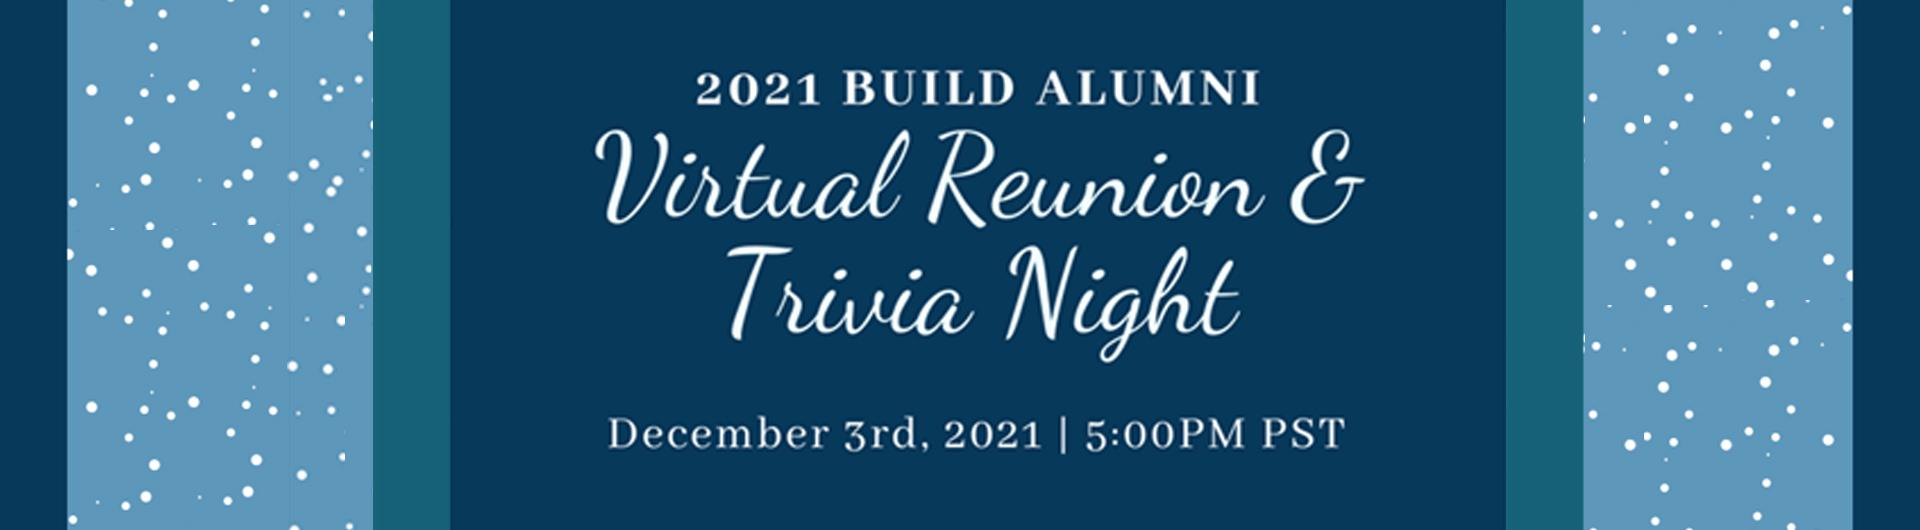 2021 BUILD Virtual Reunion Banner